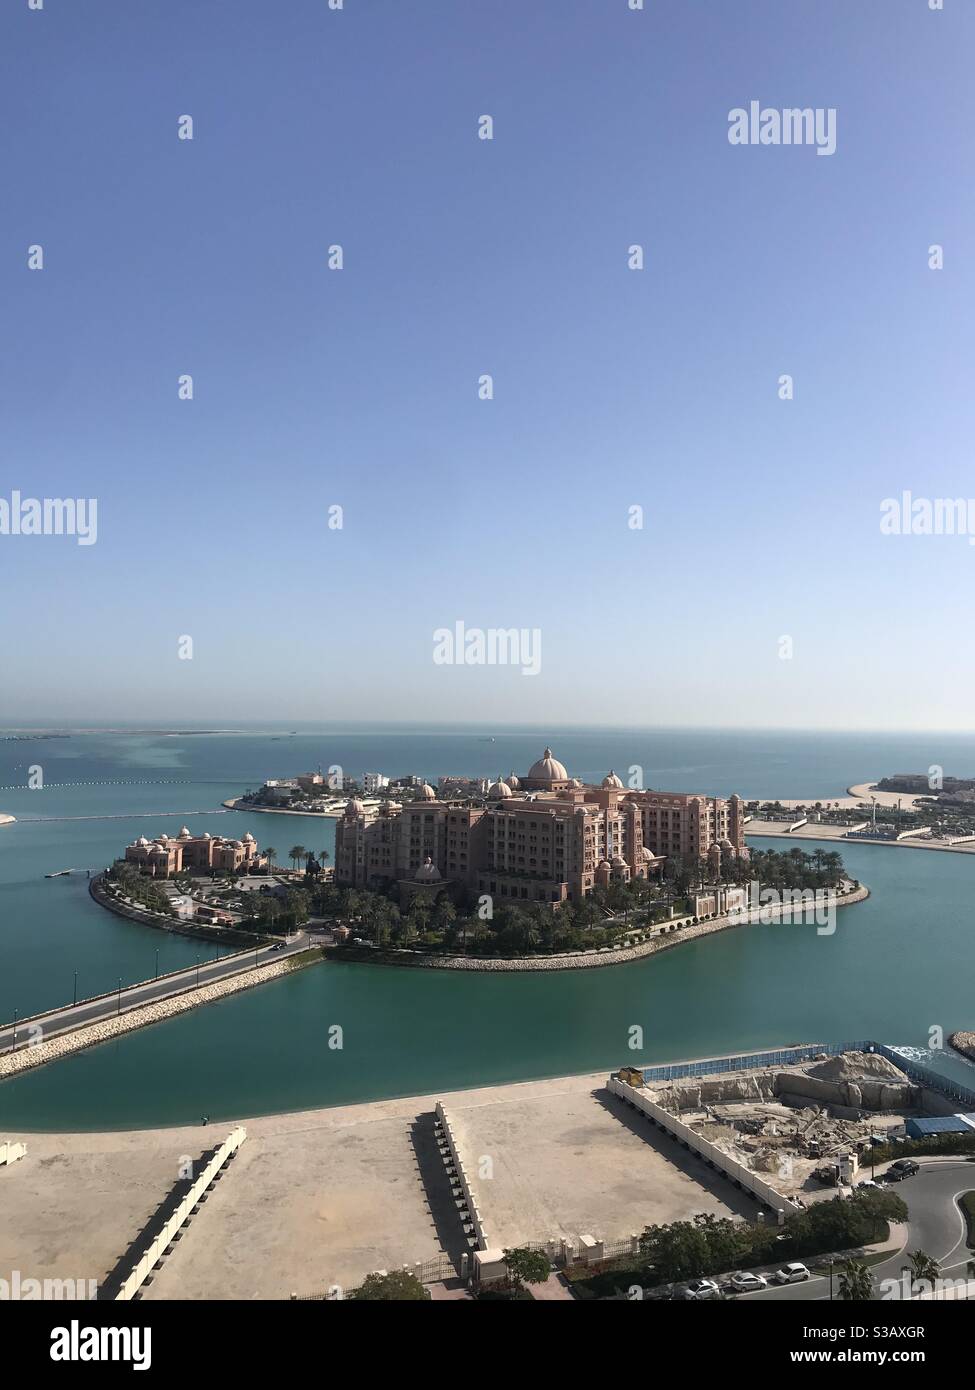 View of the Marsa Malaz Kempinski Hotel on The Pearl, Doha, Qatar Stock Photo